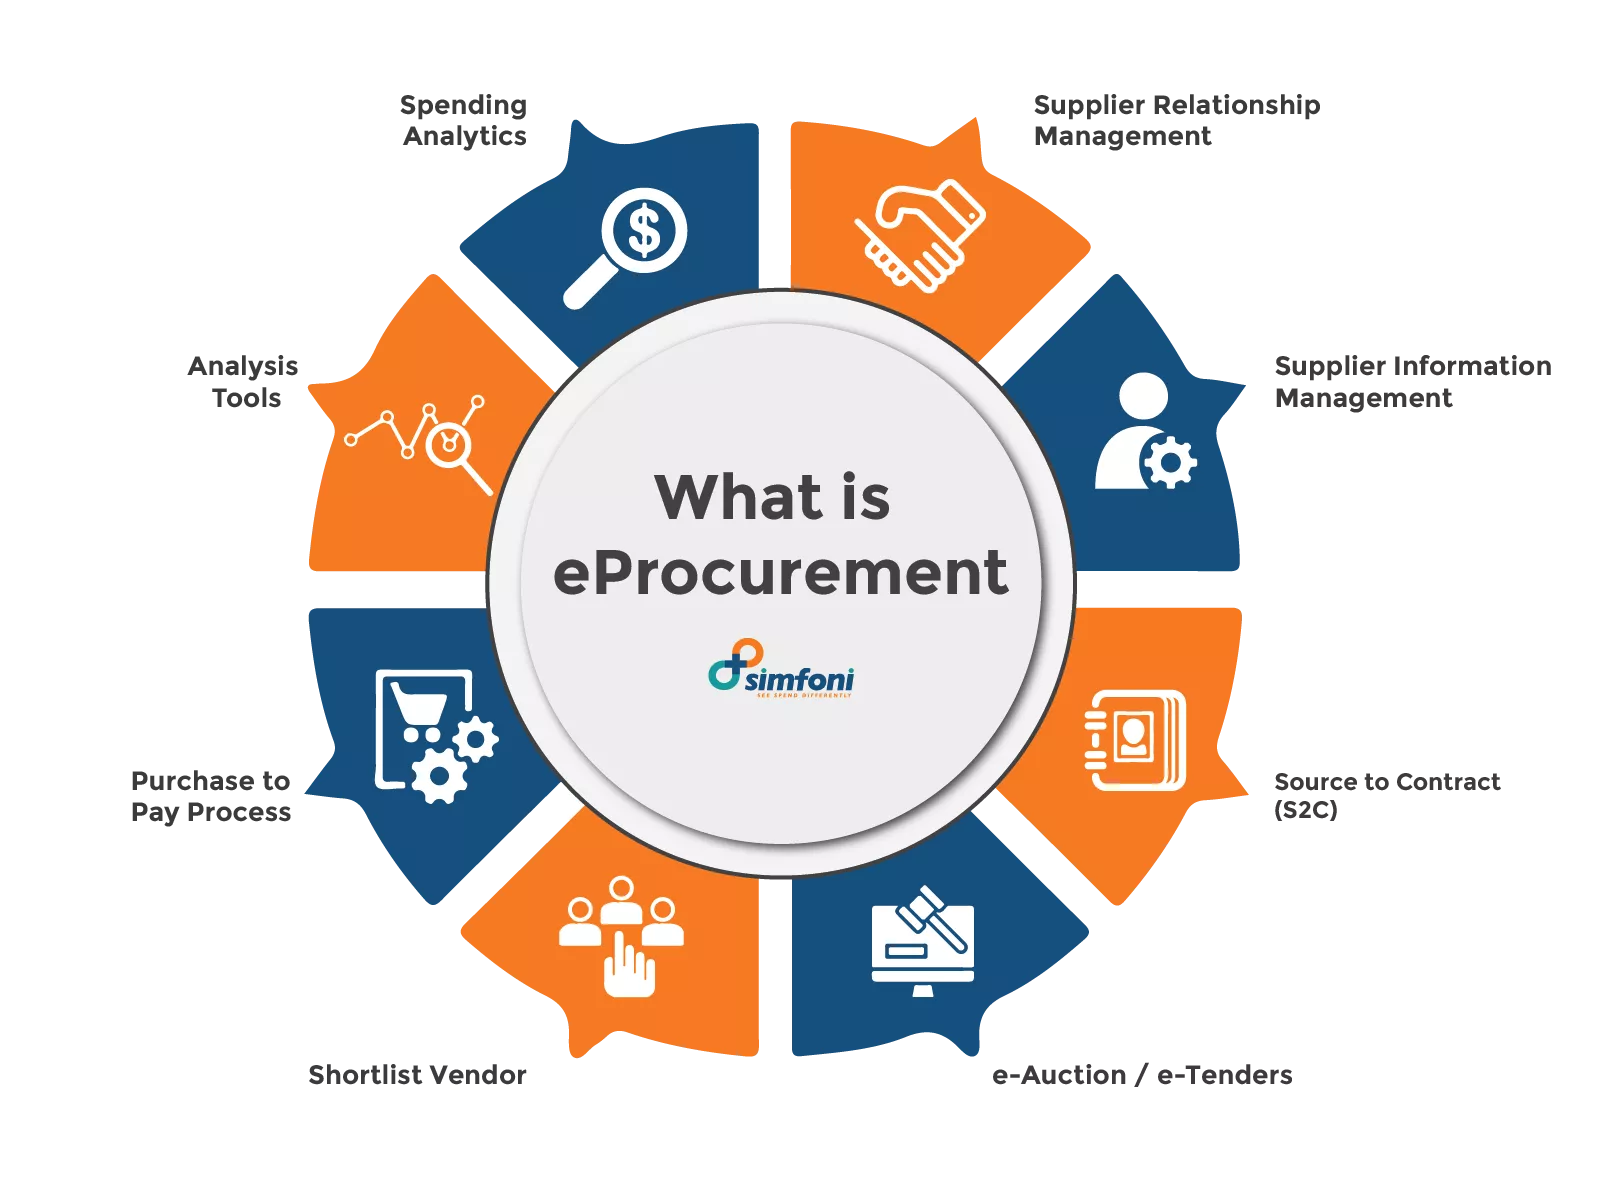 What is eProcurement